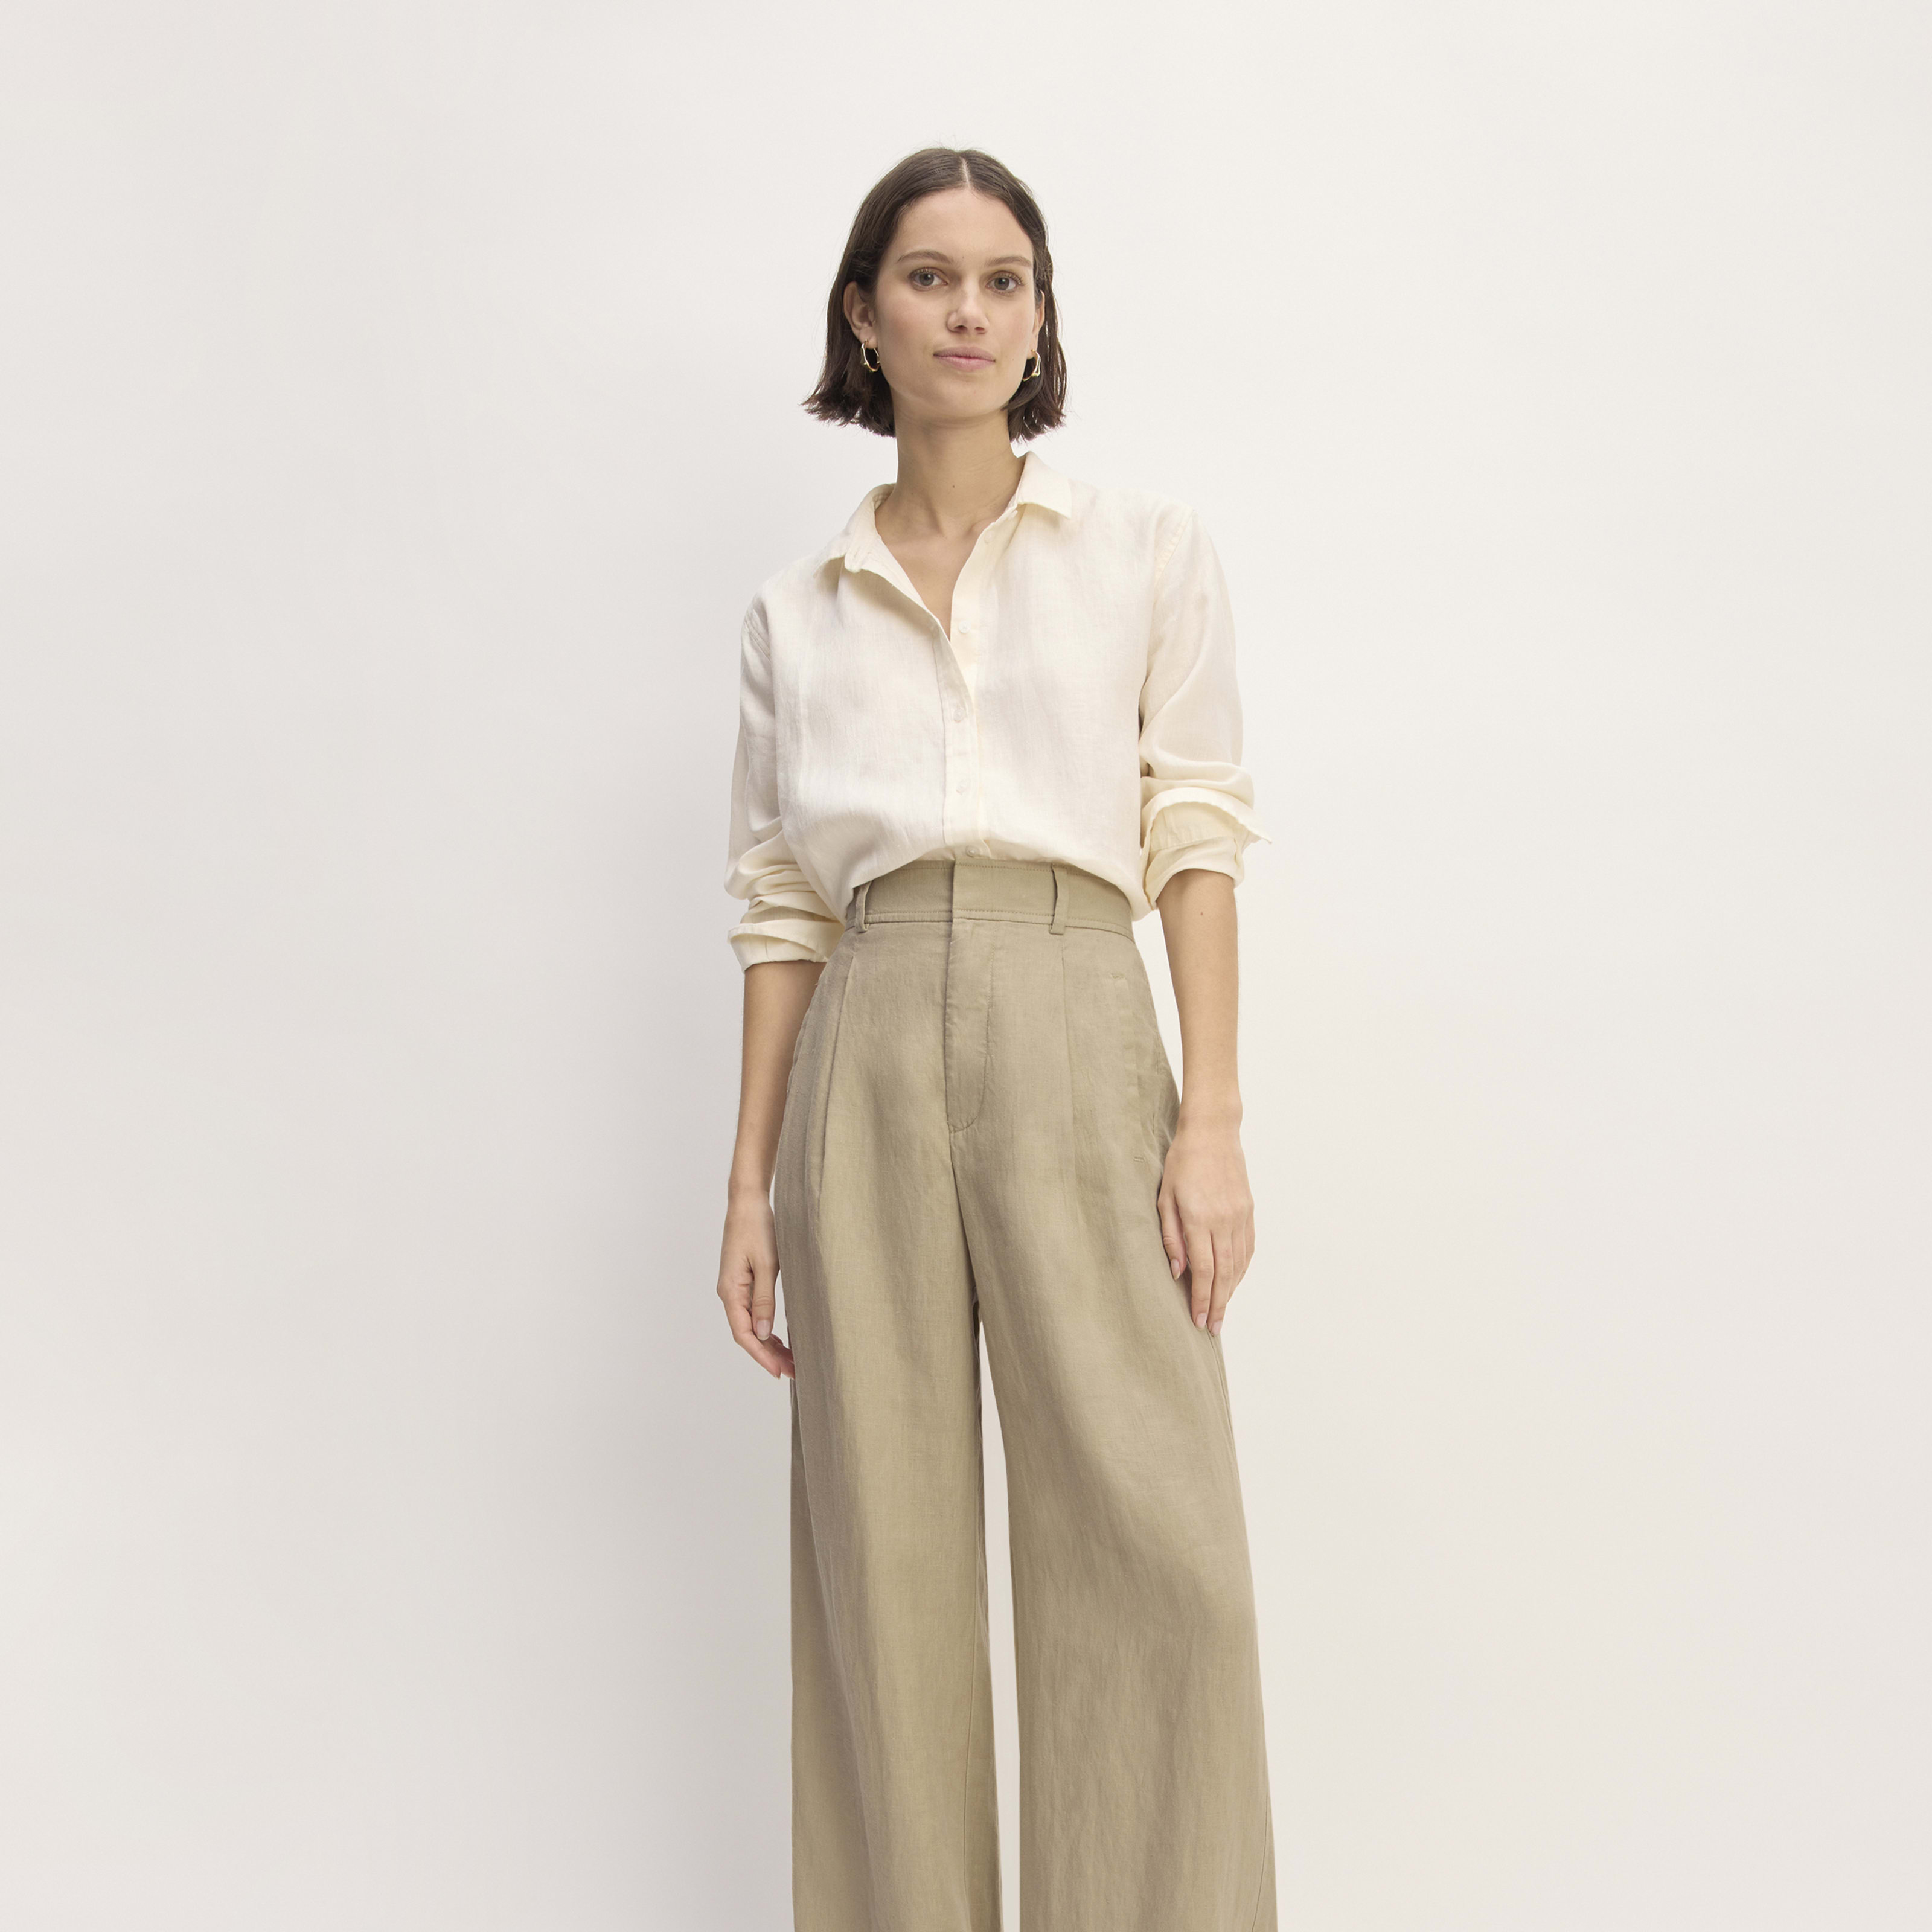 women's linen way-highâ® drape pant by everlane in khaki, size 00